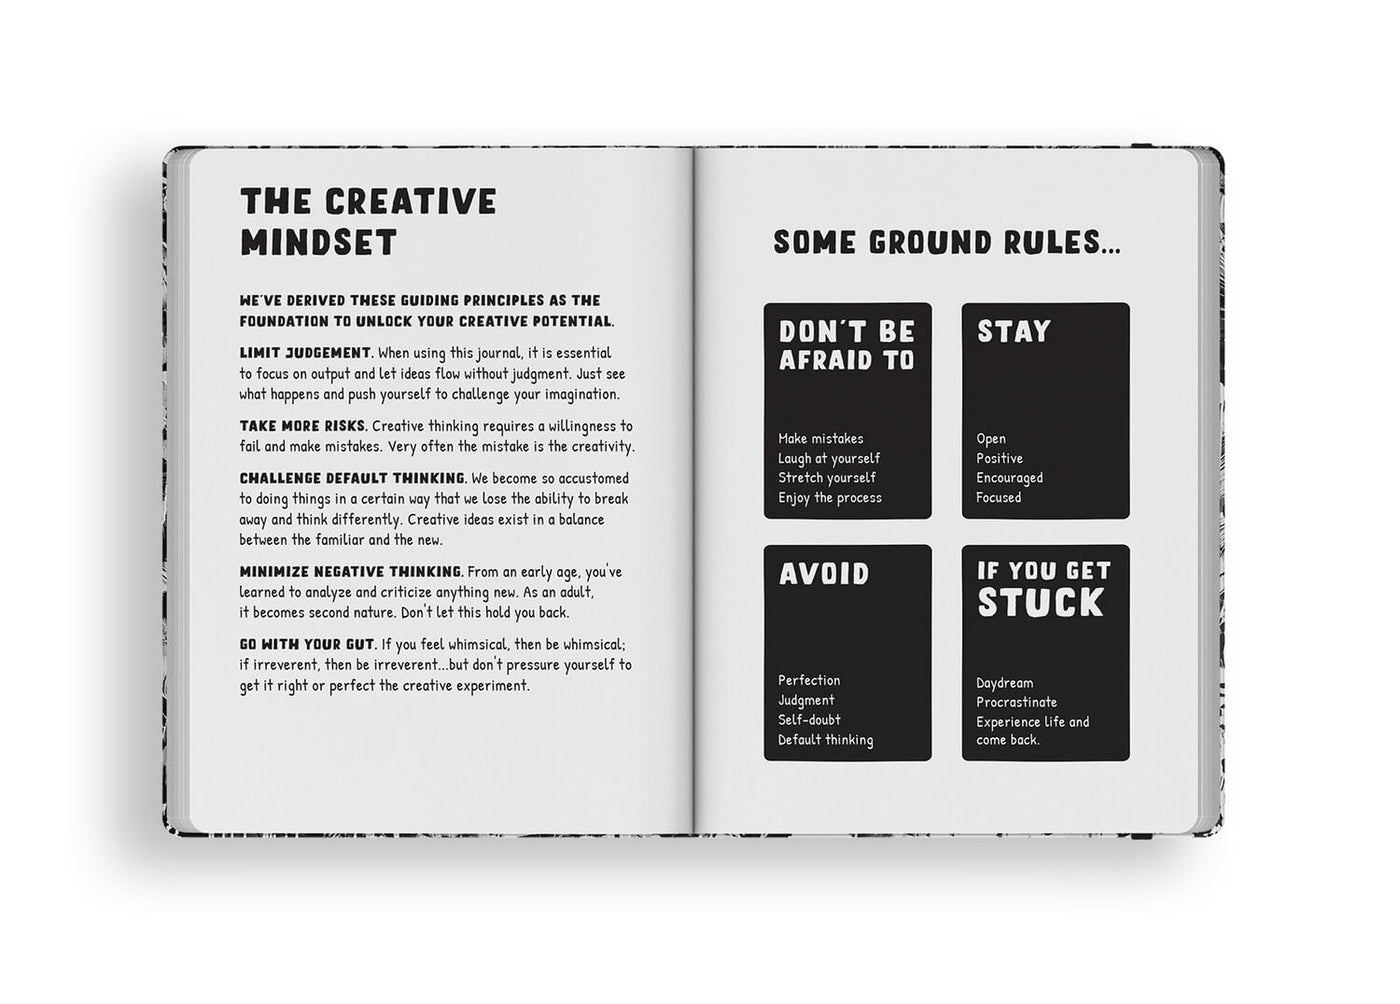 Coloring Book Vol 1 + Original Creative Thinking Journal + Pencil Set